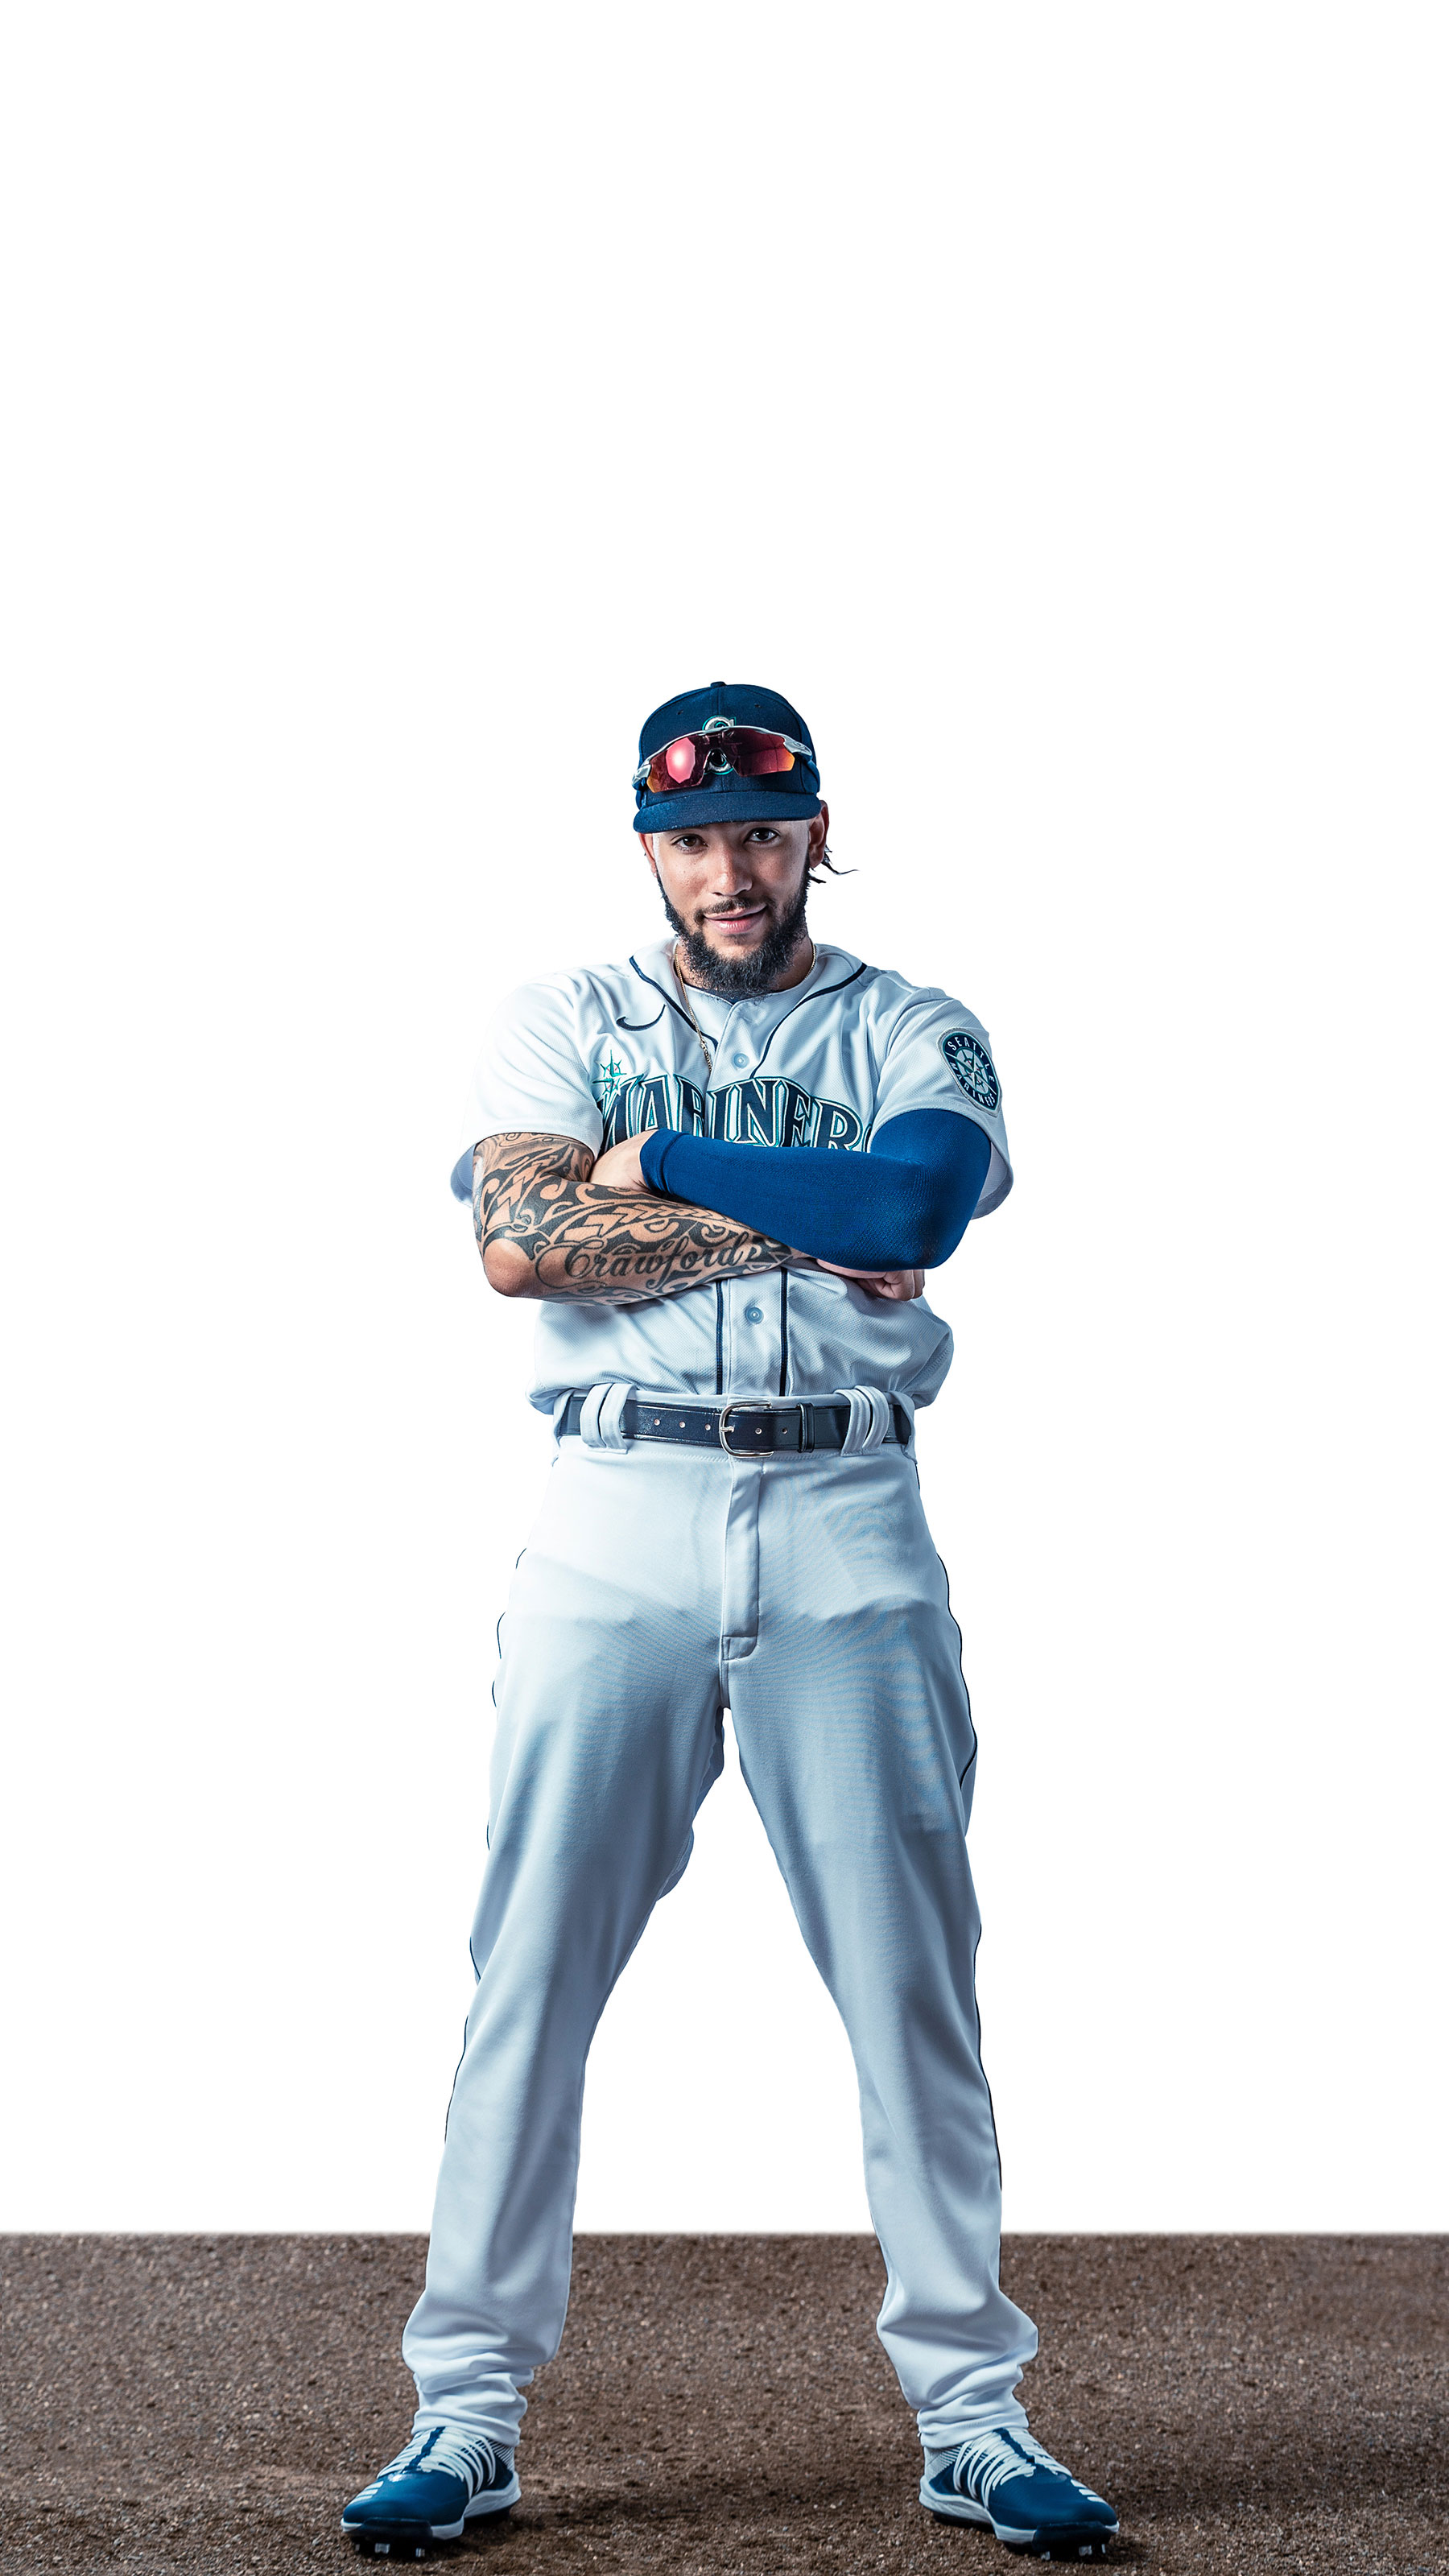 Dodgers Baseball Team 4K wallpaper download